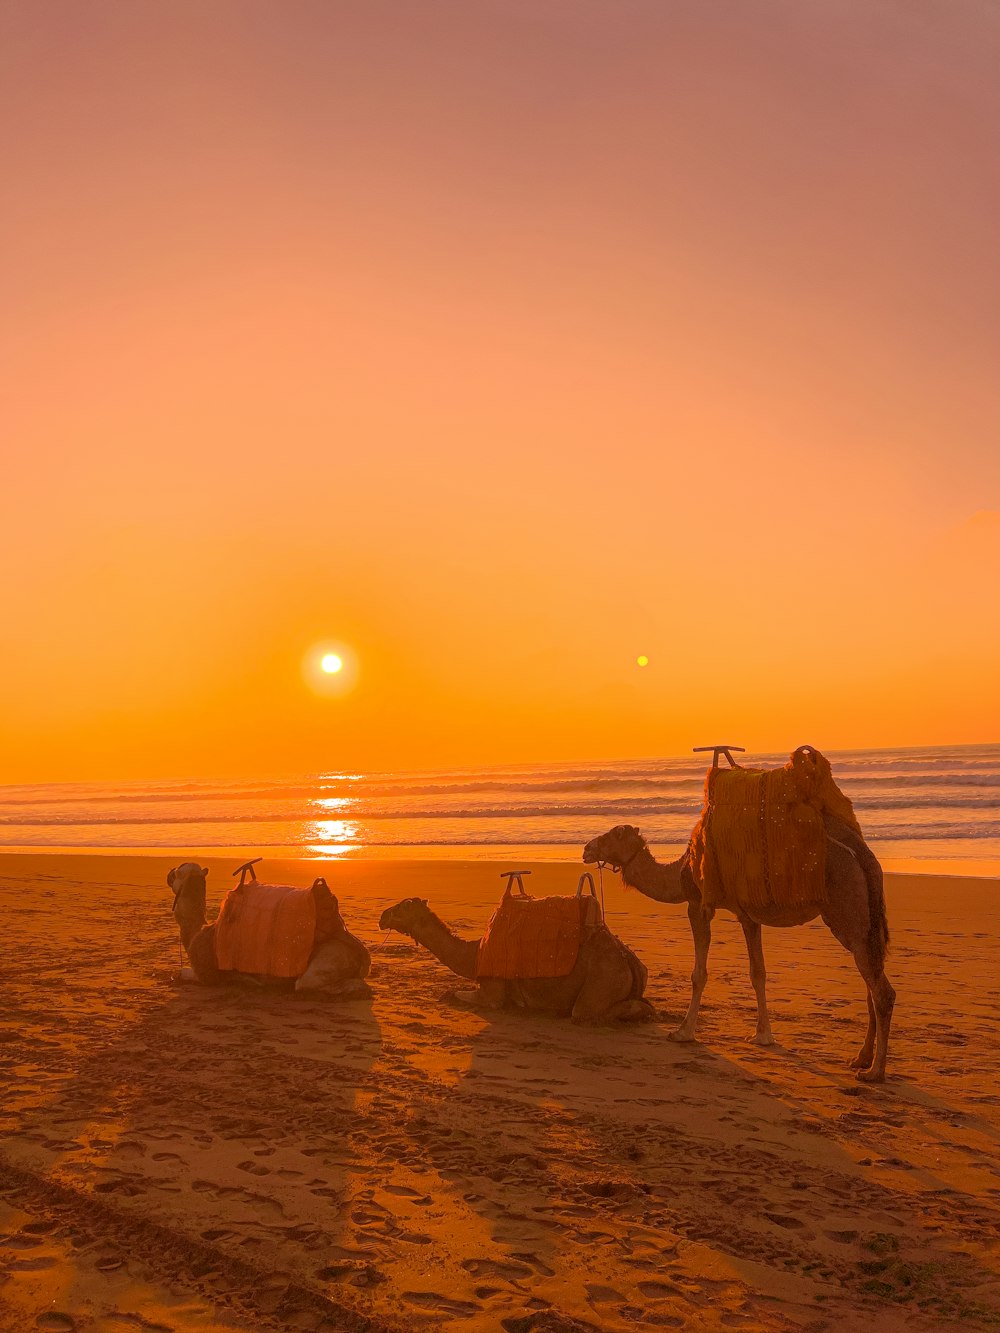 a camel standing on top of a sandy beach